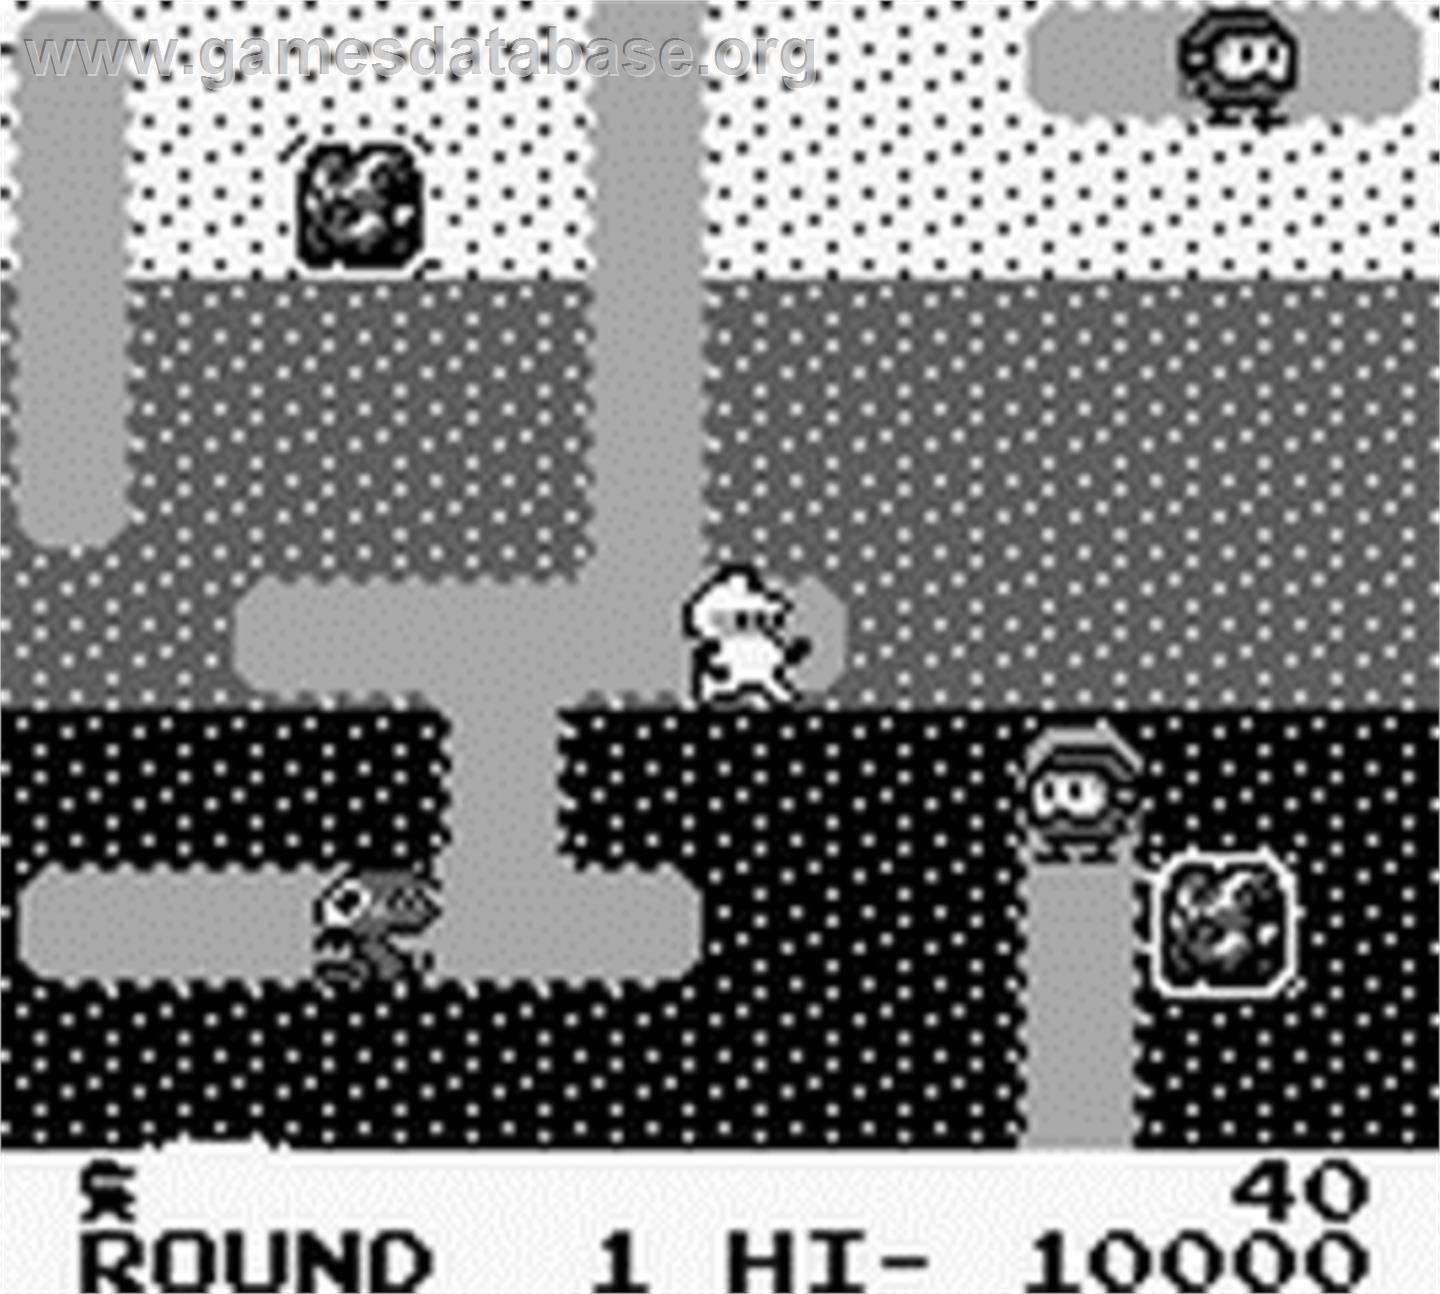 Dig Dug - Nintendo Game Boy - Artwork - In Game